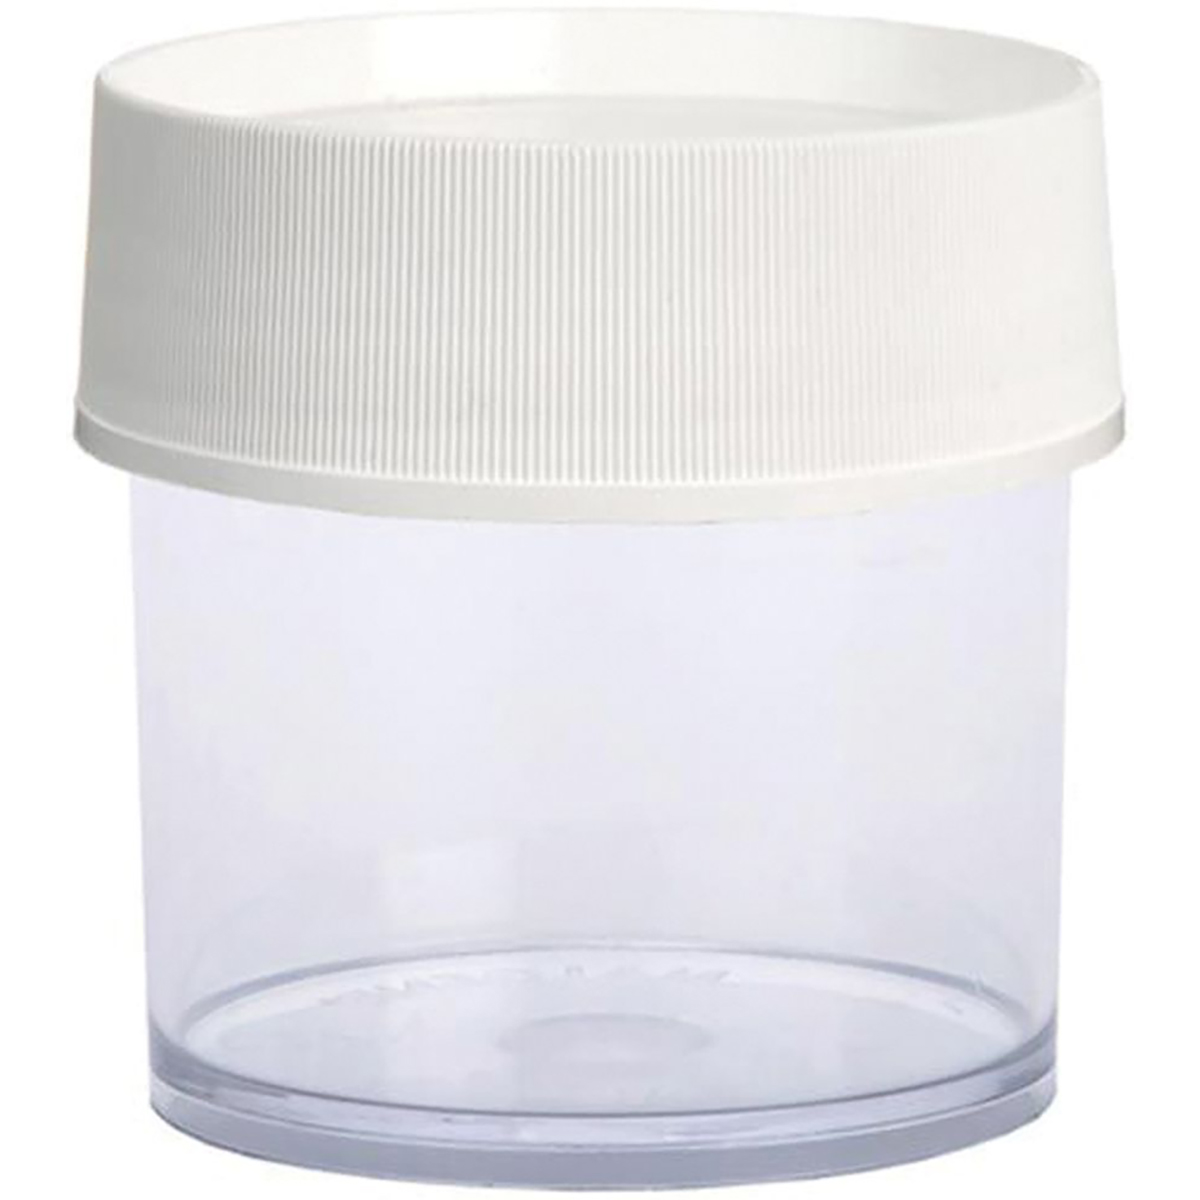 Nalgene Polypropylene Wide Mouth Storage Jar - 4 oz. - Clear - image 1 of 7